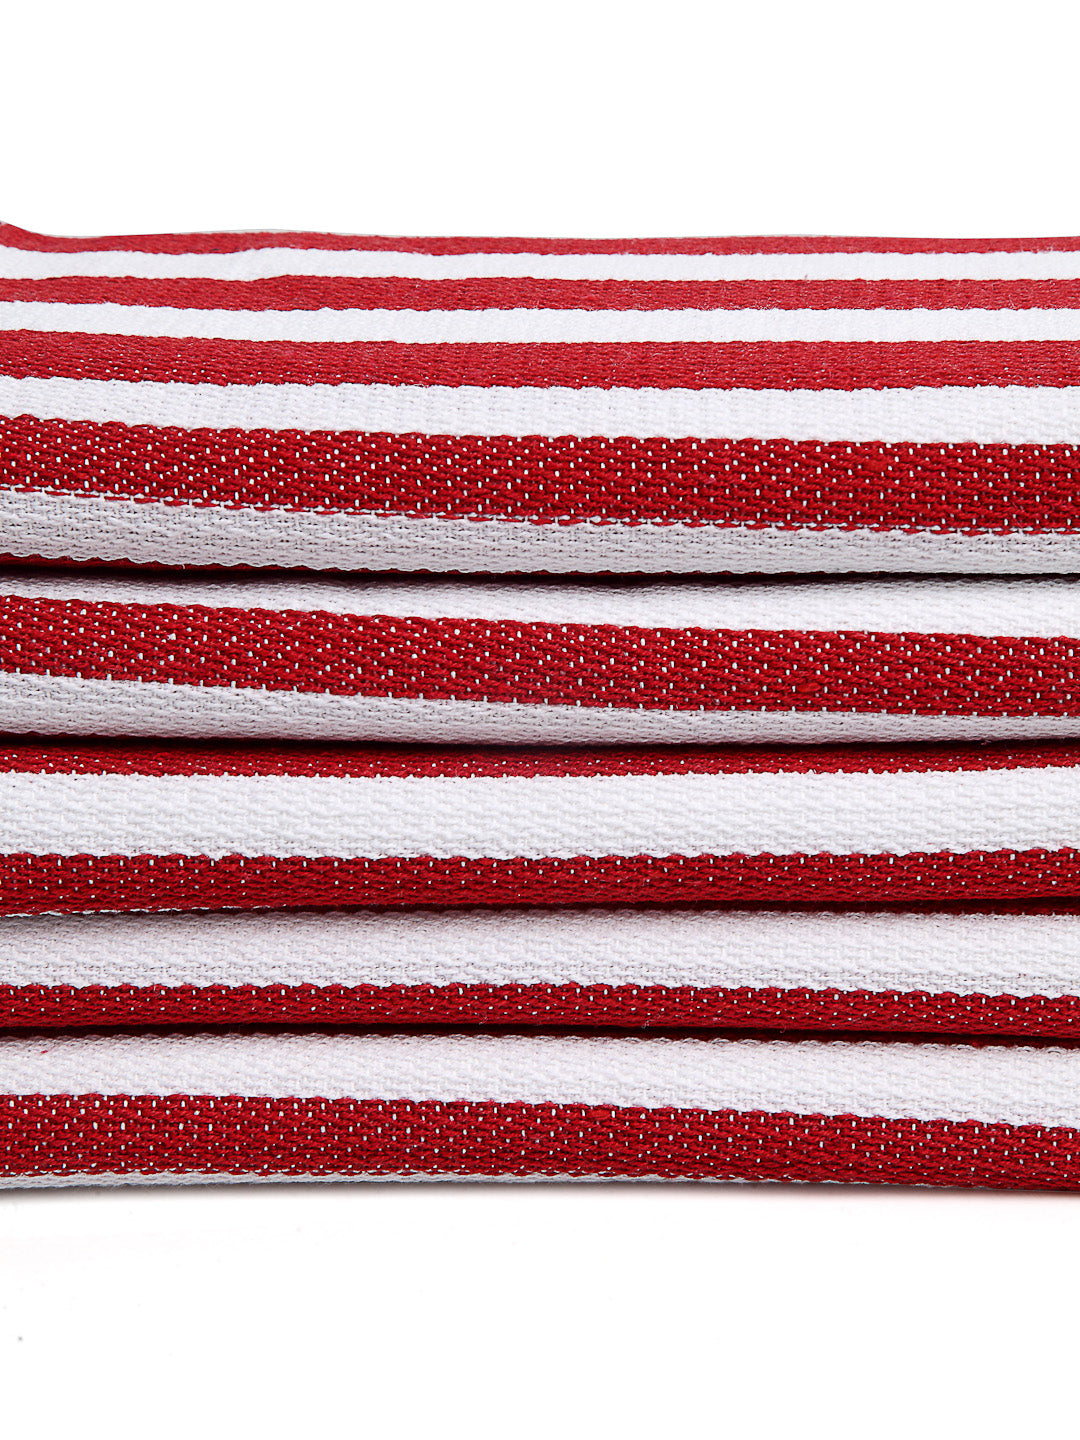 Arrabi Red Stripes Handwoven Cotton Hand Towel (Set of 5) (85 X 35 cm)